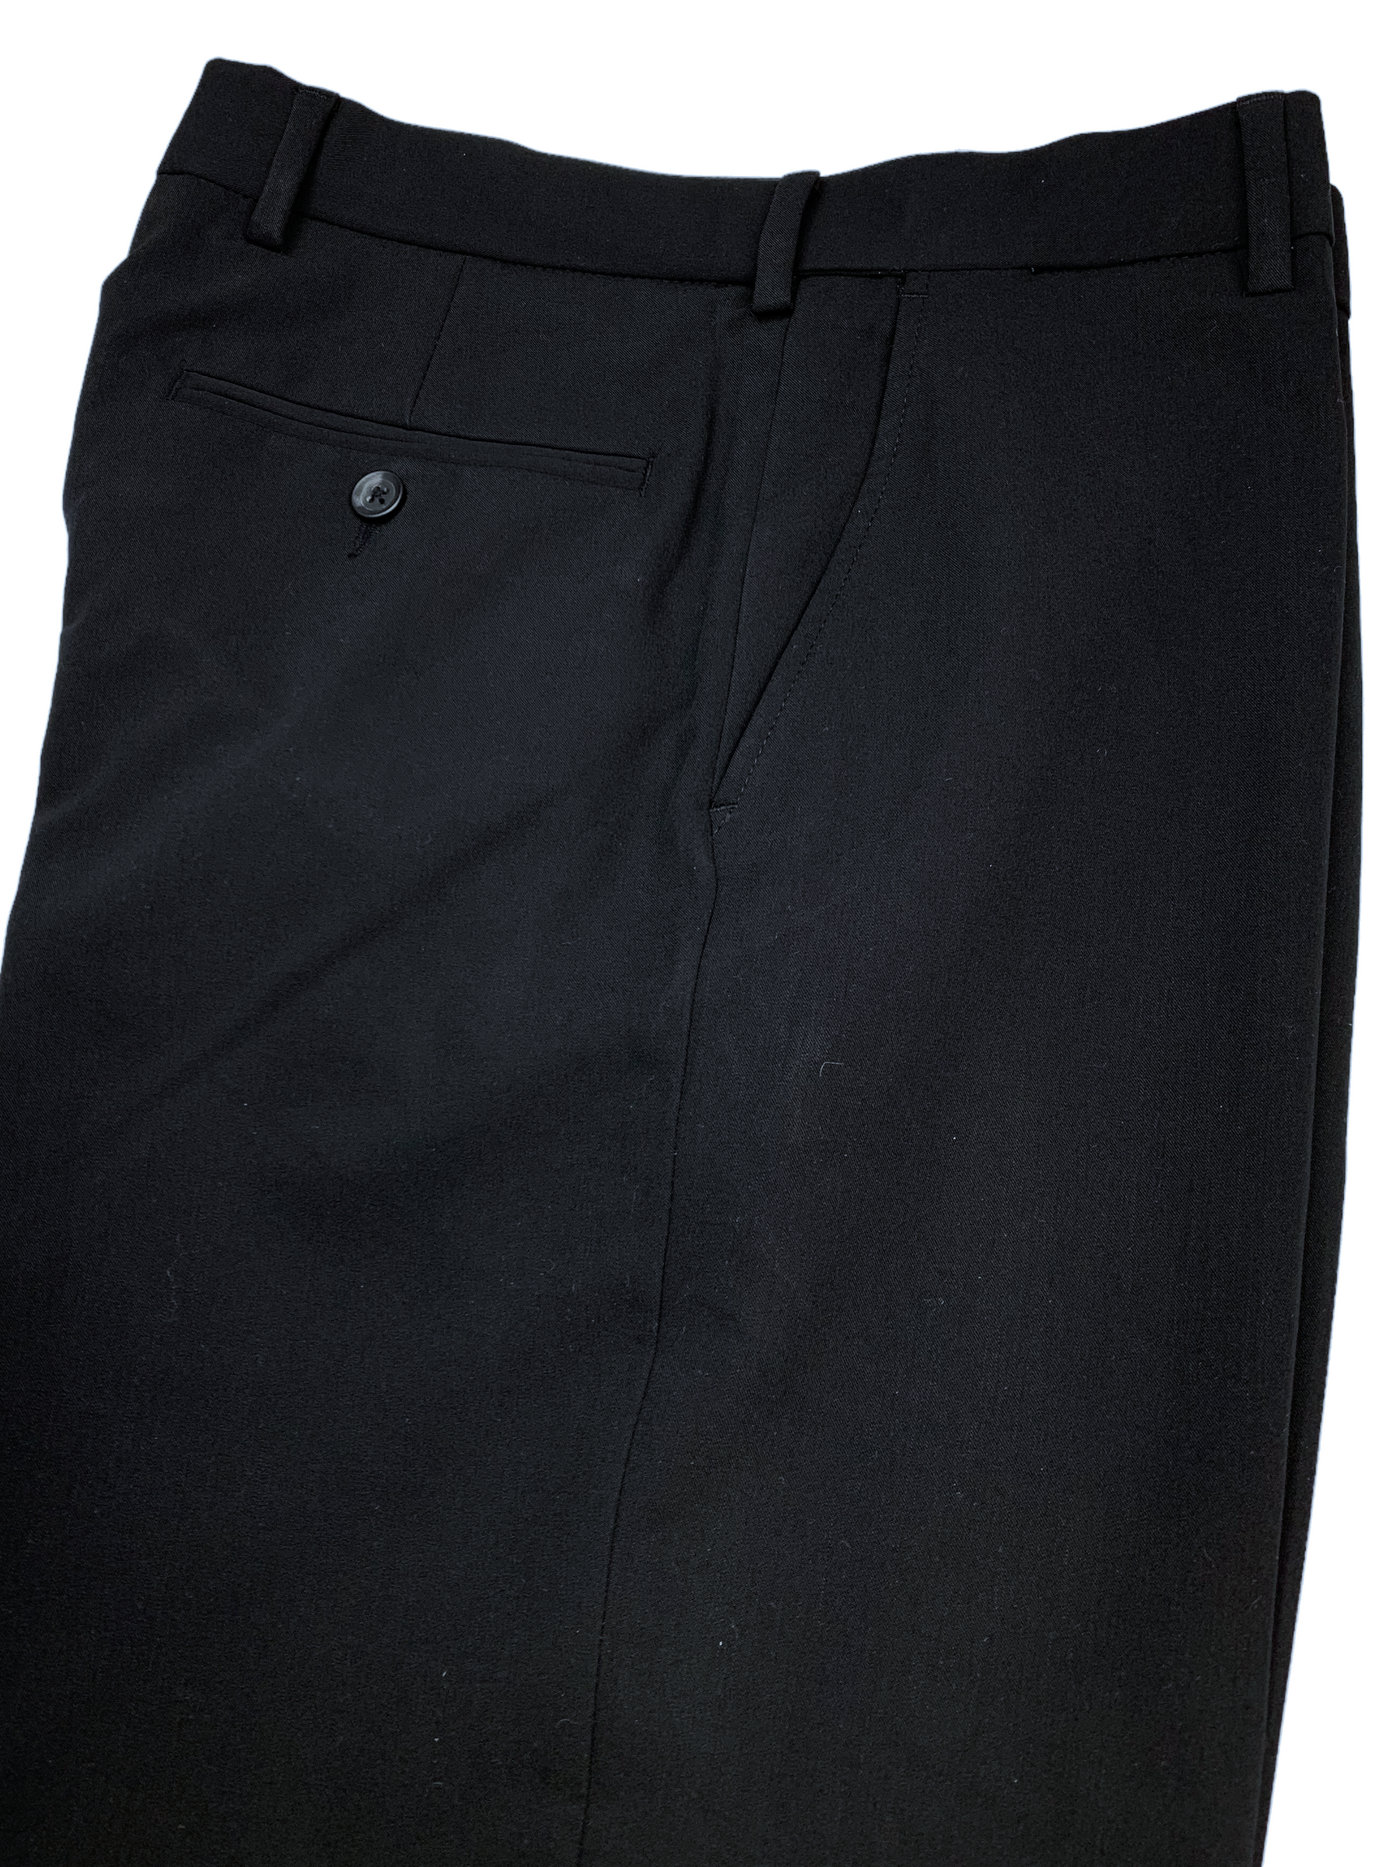 Pantalon habillé noir Barris